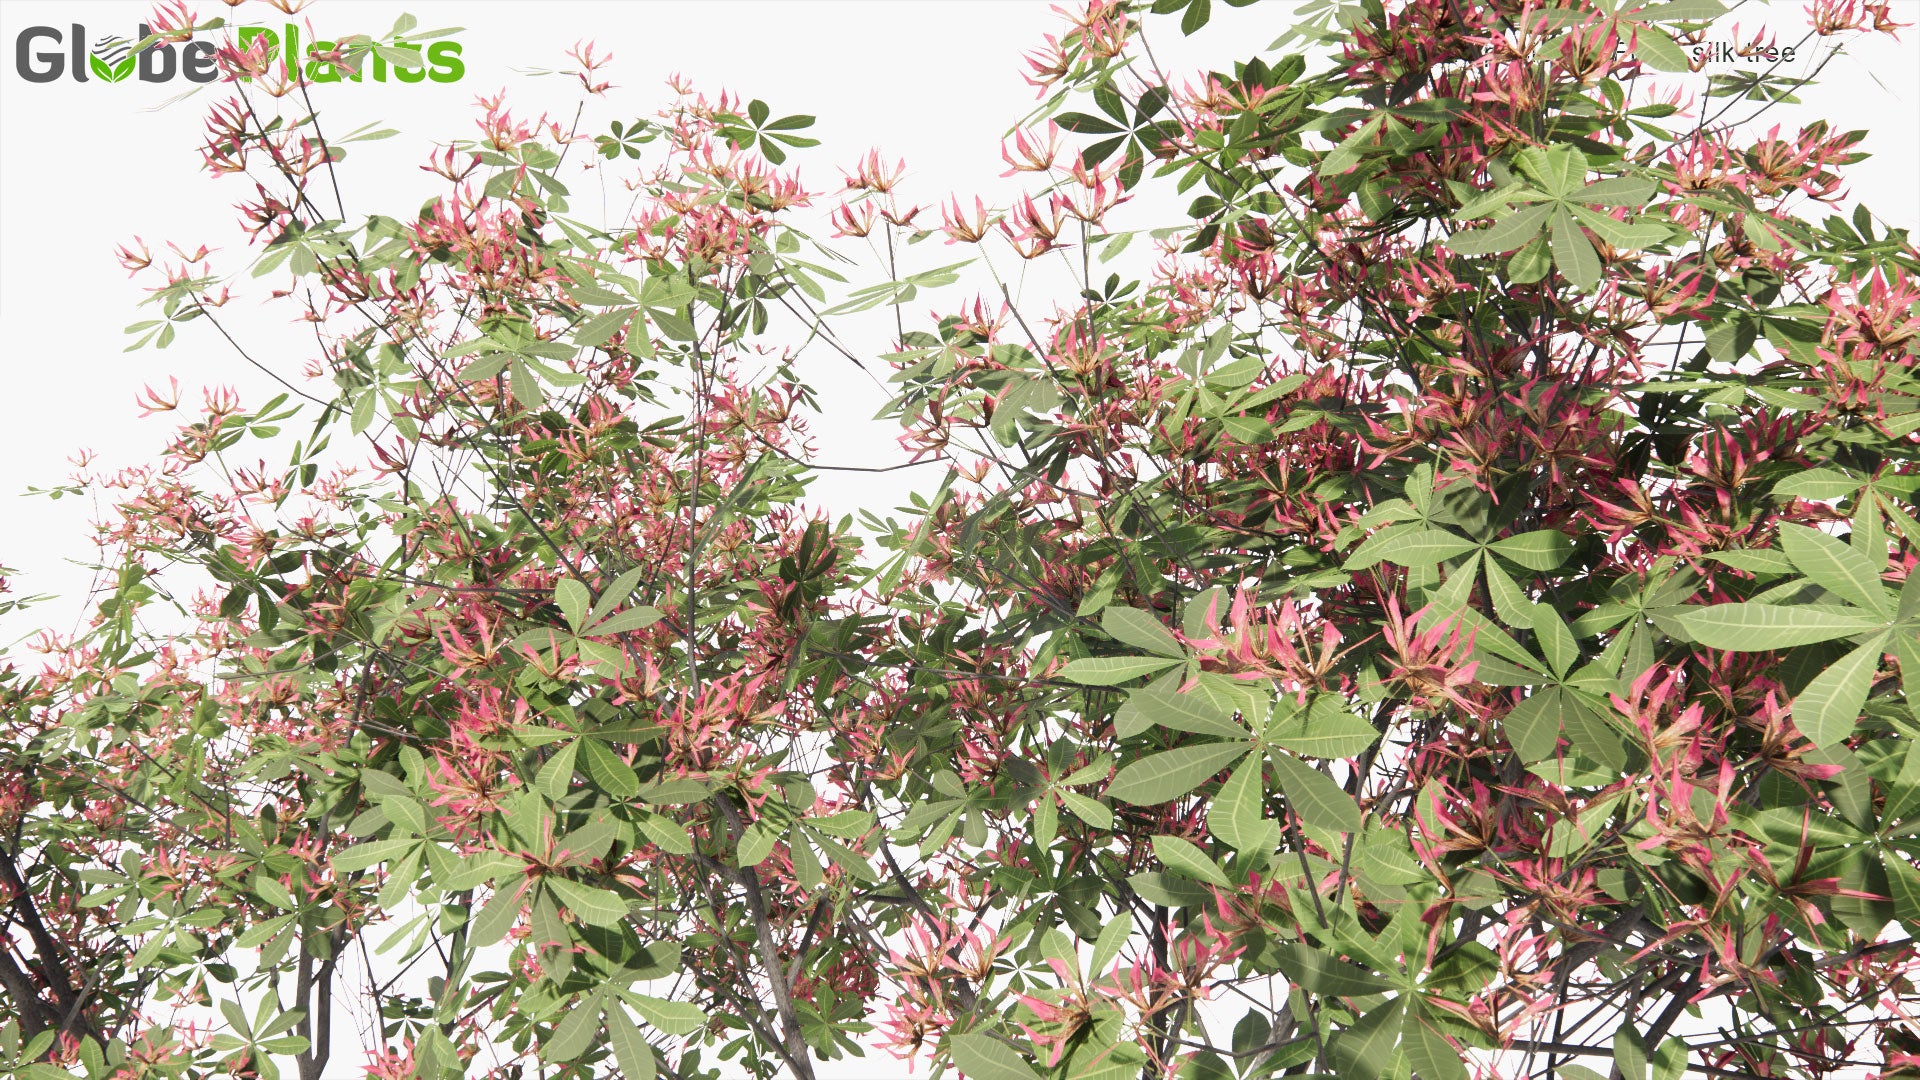 Low Poly Ceiba Speciosa - Silk Floss Tree (3D Model)